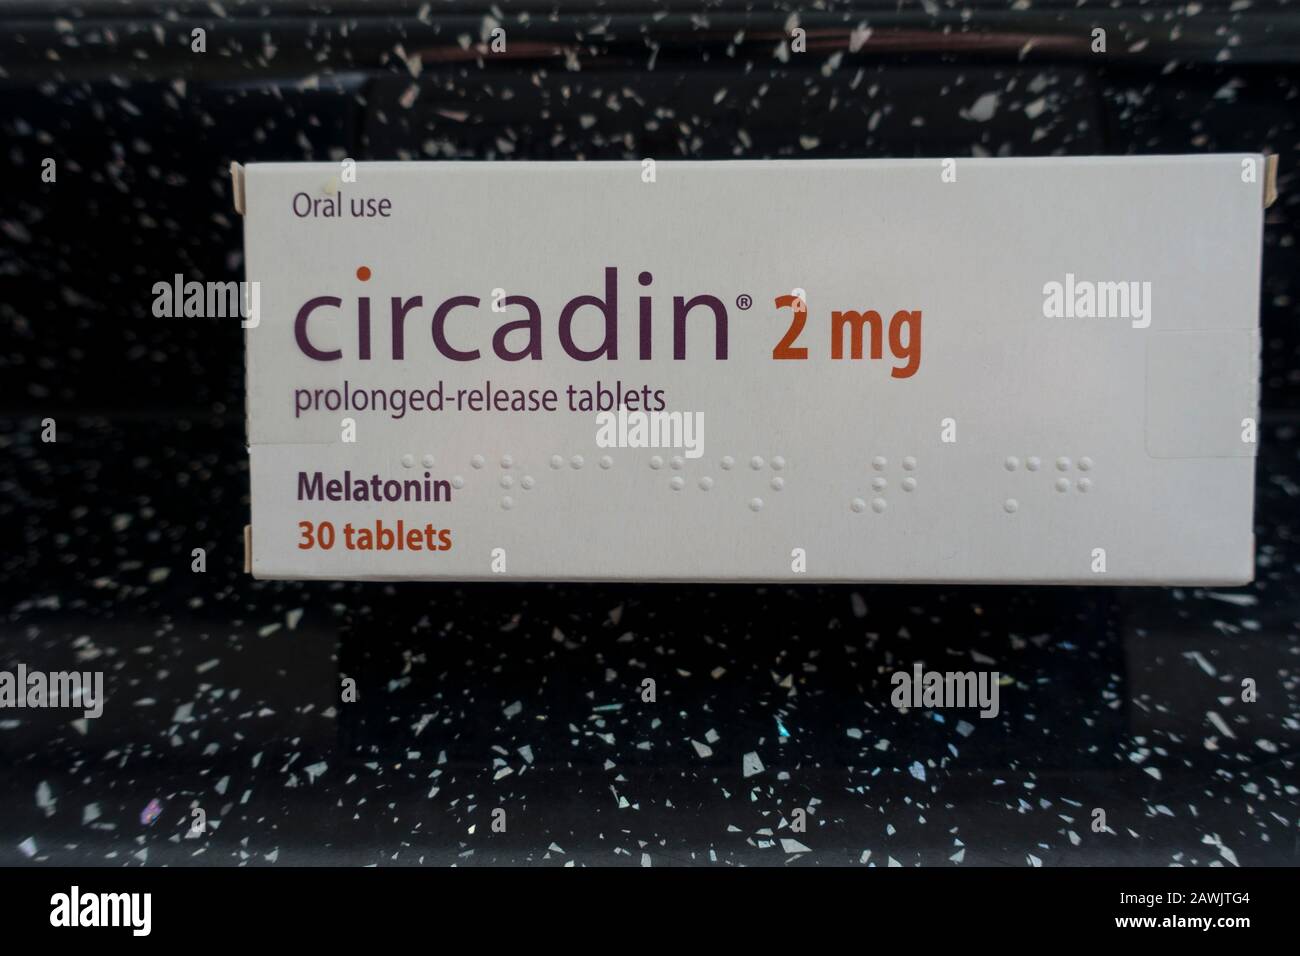 Circadin Melatonin,prolonged release tablets used for insomnia,UK. Stock Photo